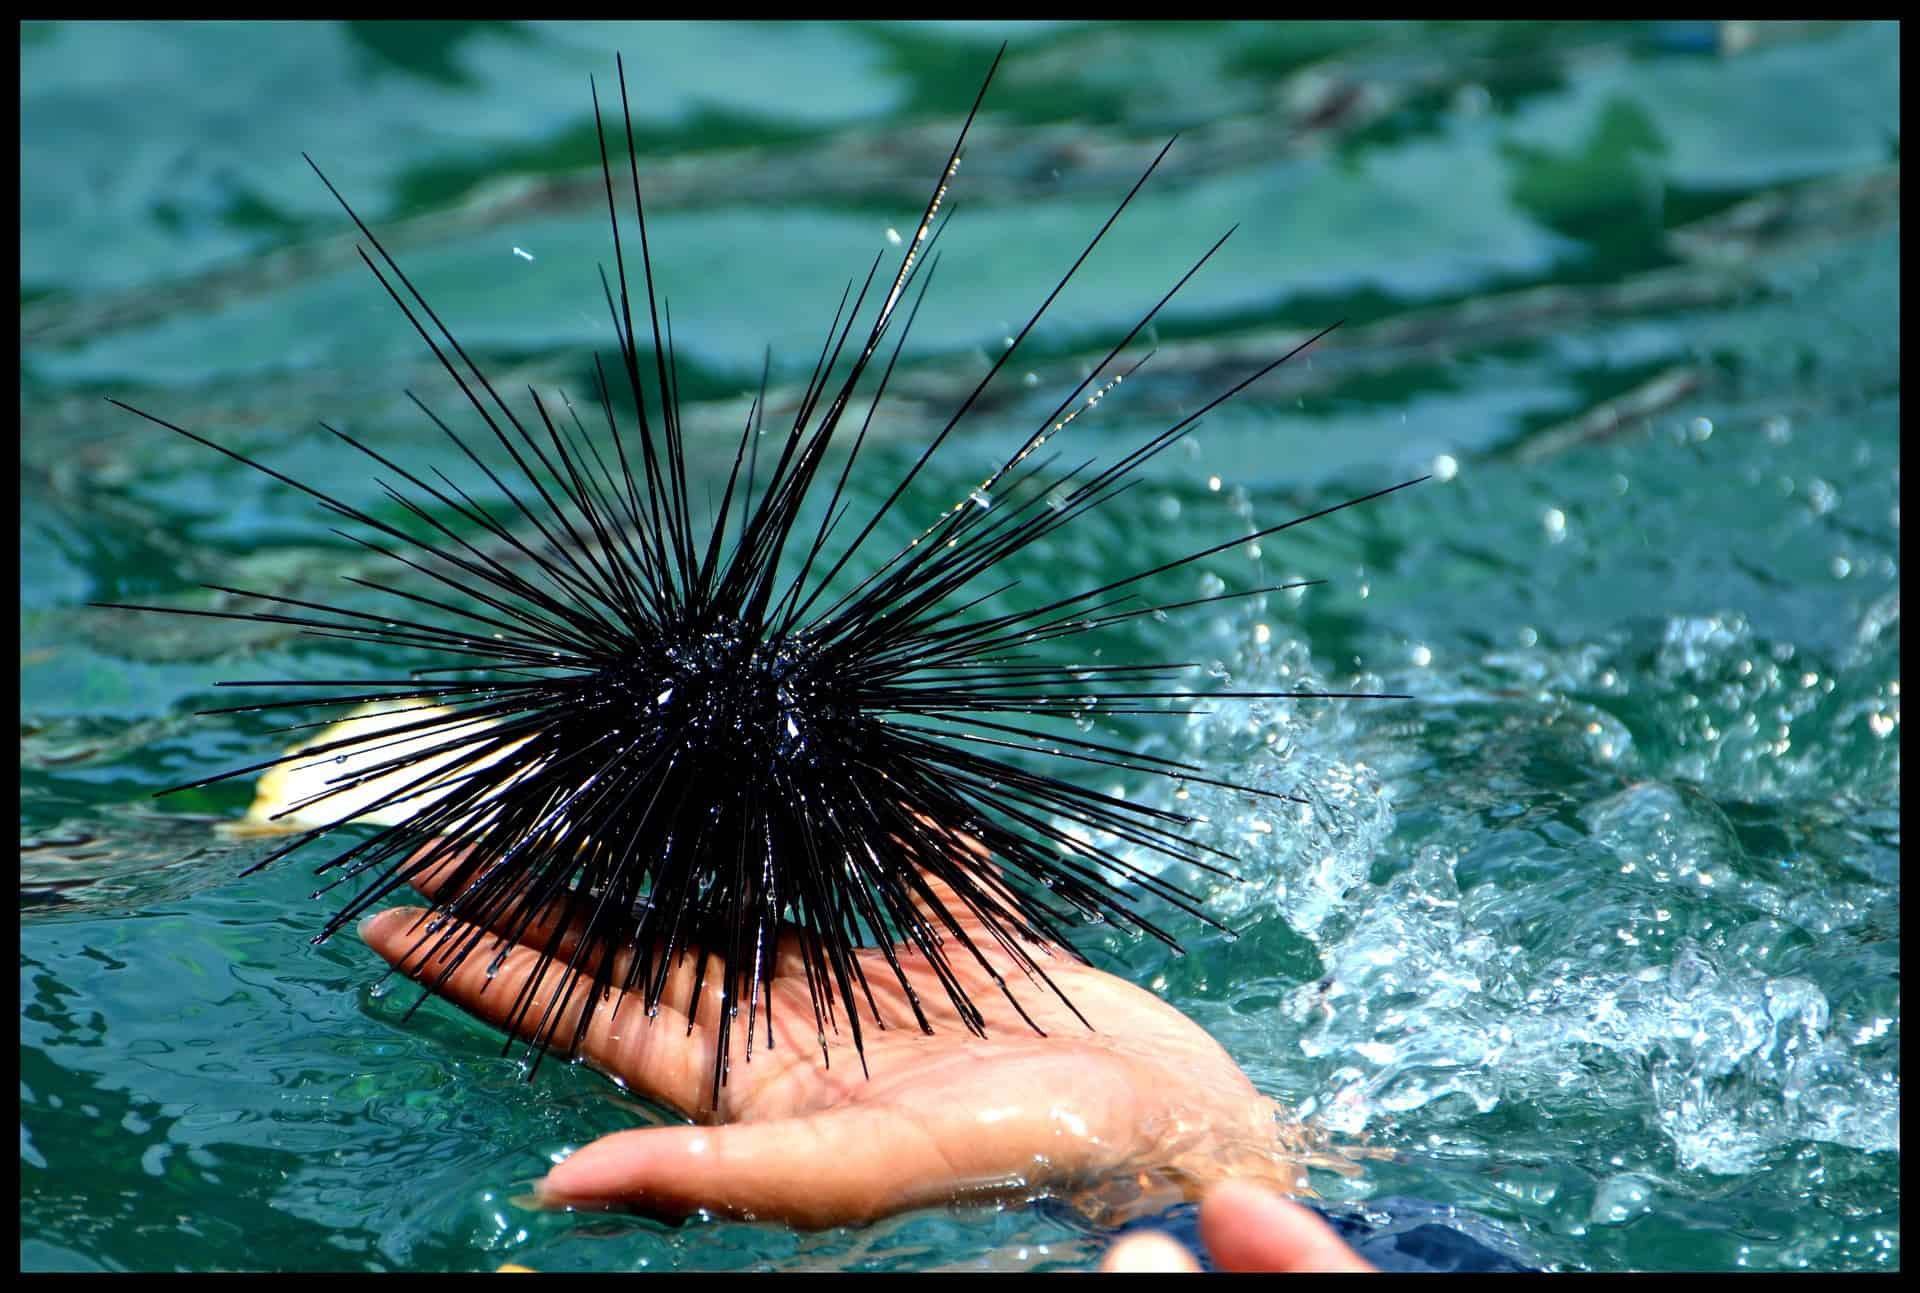 uni sea urchin